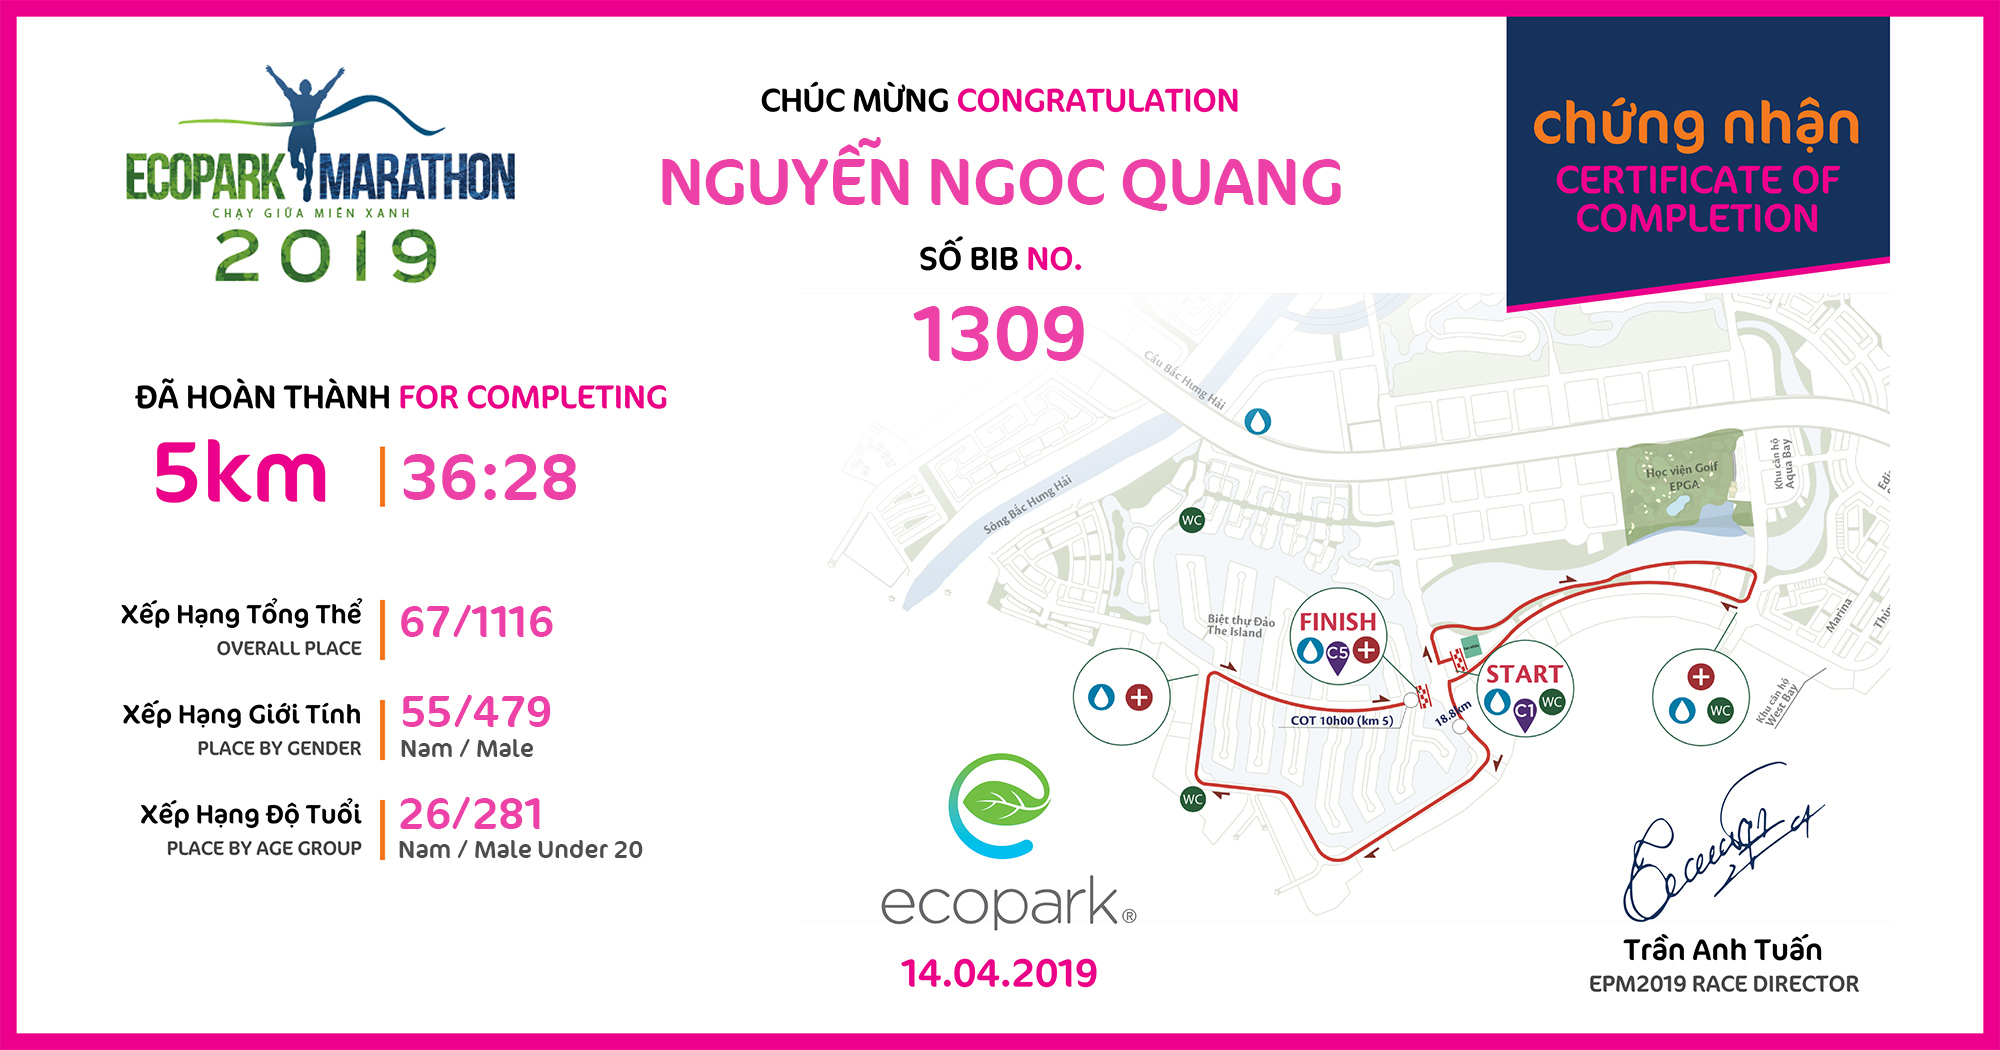 1309 - Nguyễn Ngoc Quang